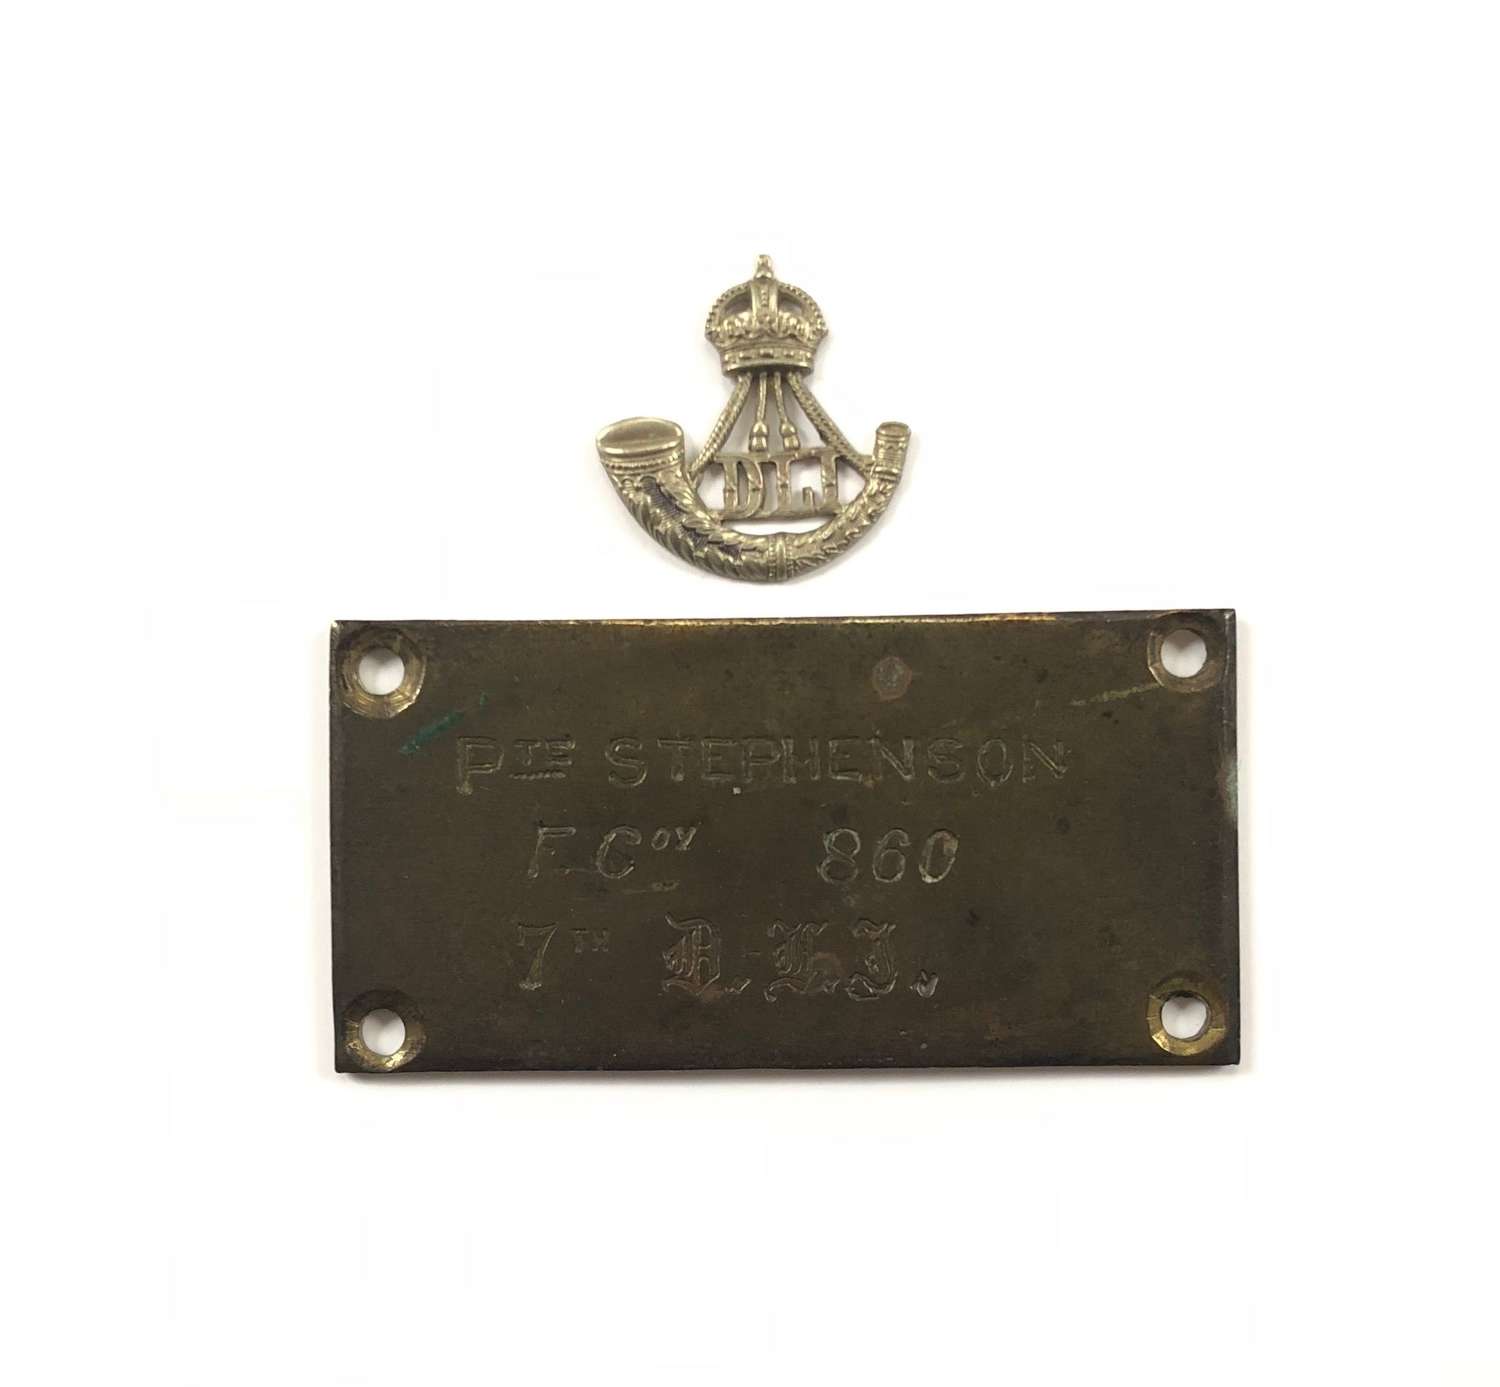 7th Bn Durham Light Infantry Brass Plaque.